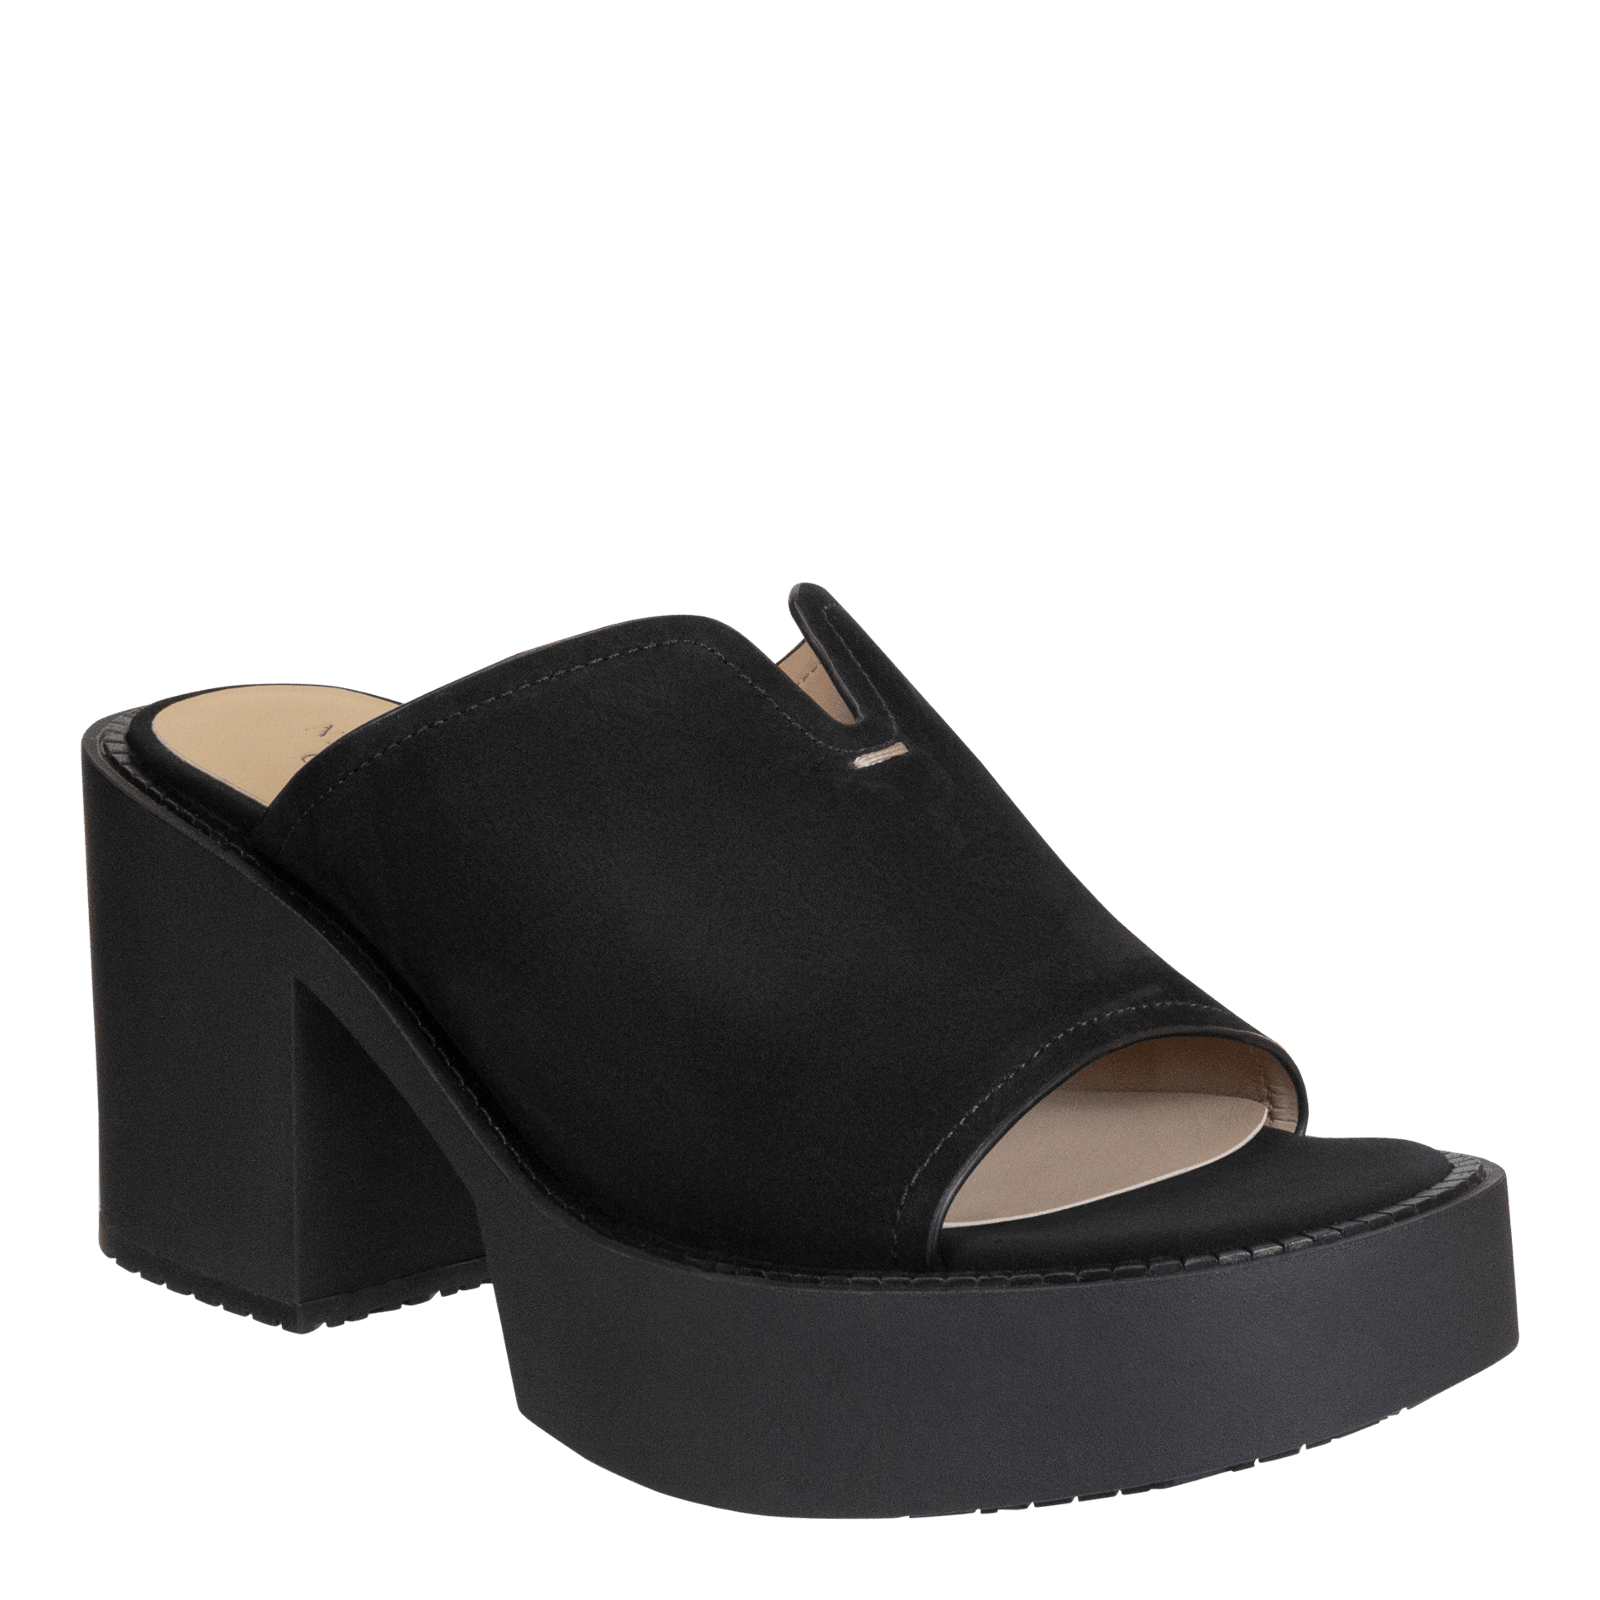 NAKED FEET - FREJA in BLACK Heeled Sandals WOMEN FOOTWEAR NAKED FEET 